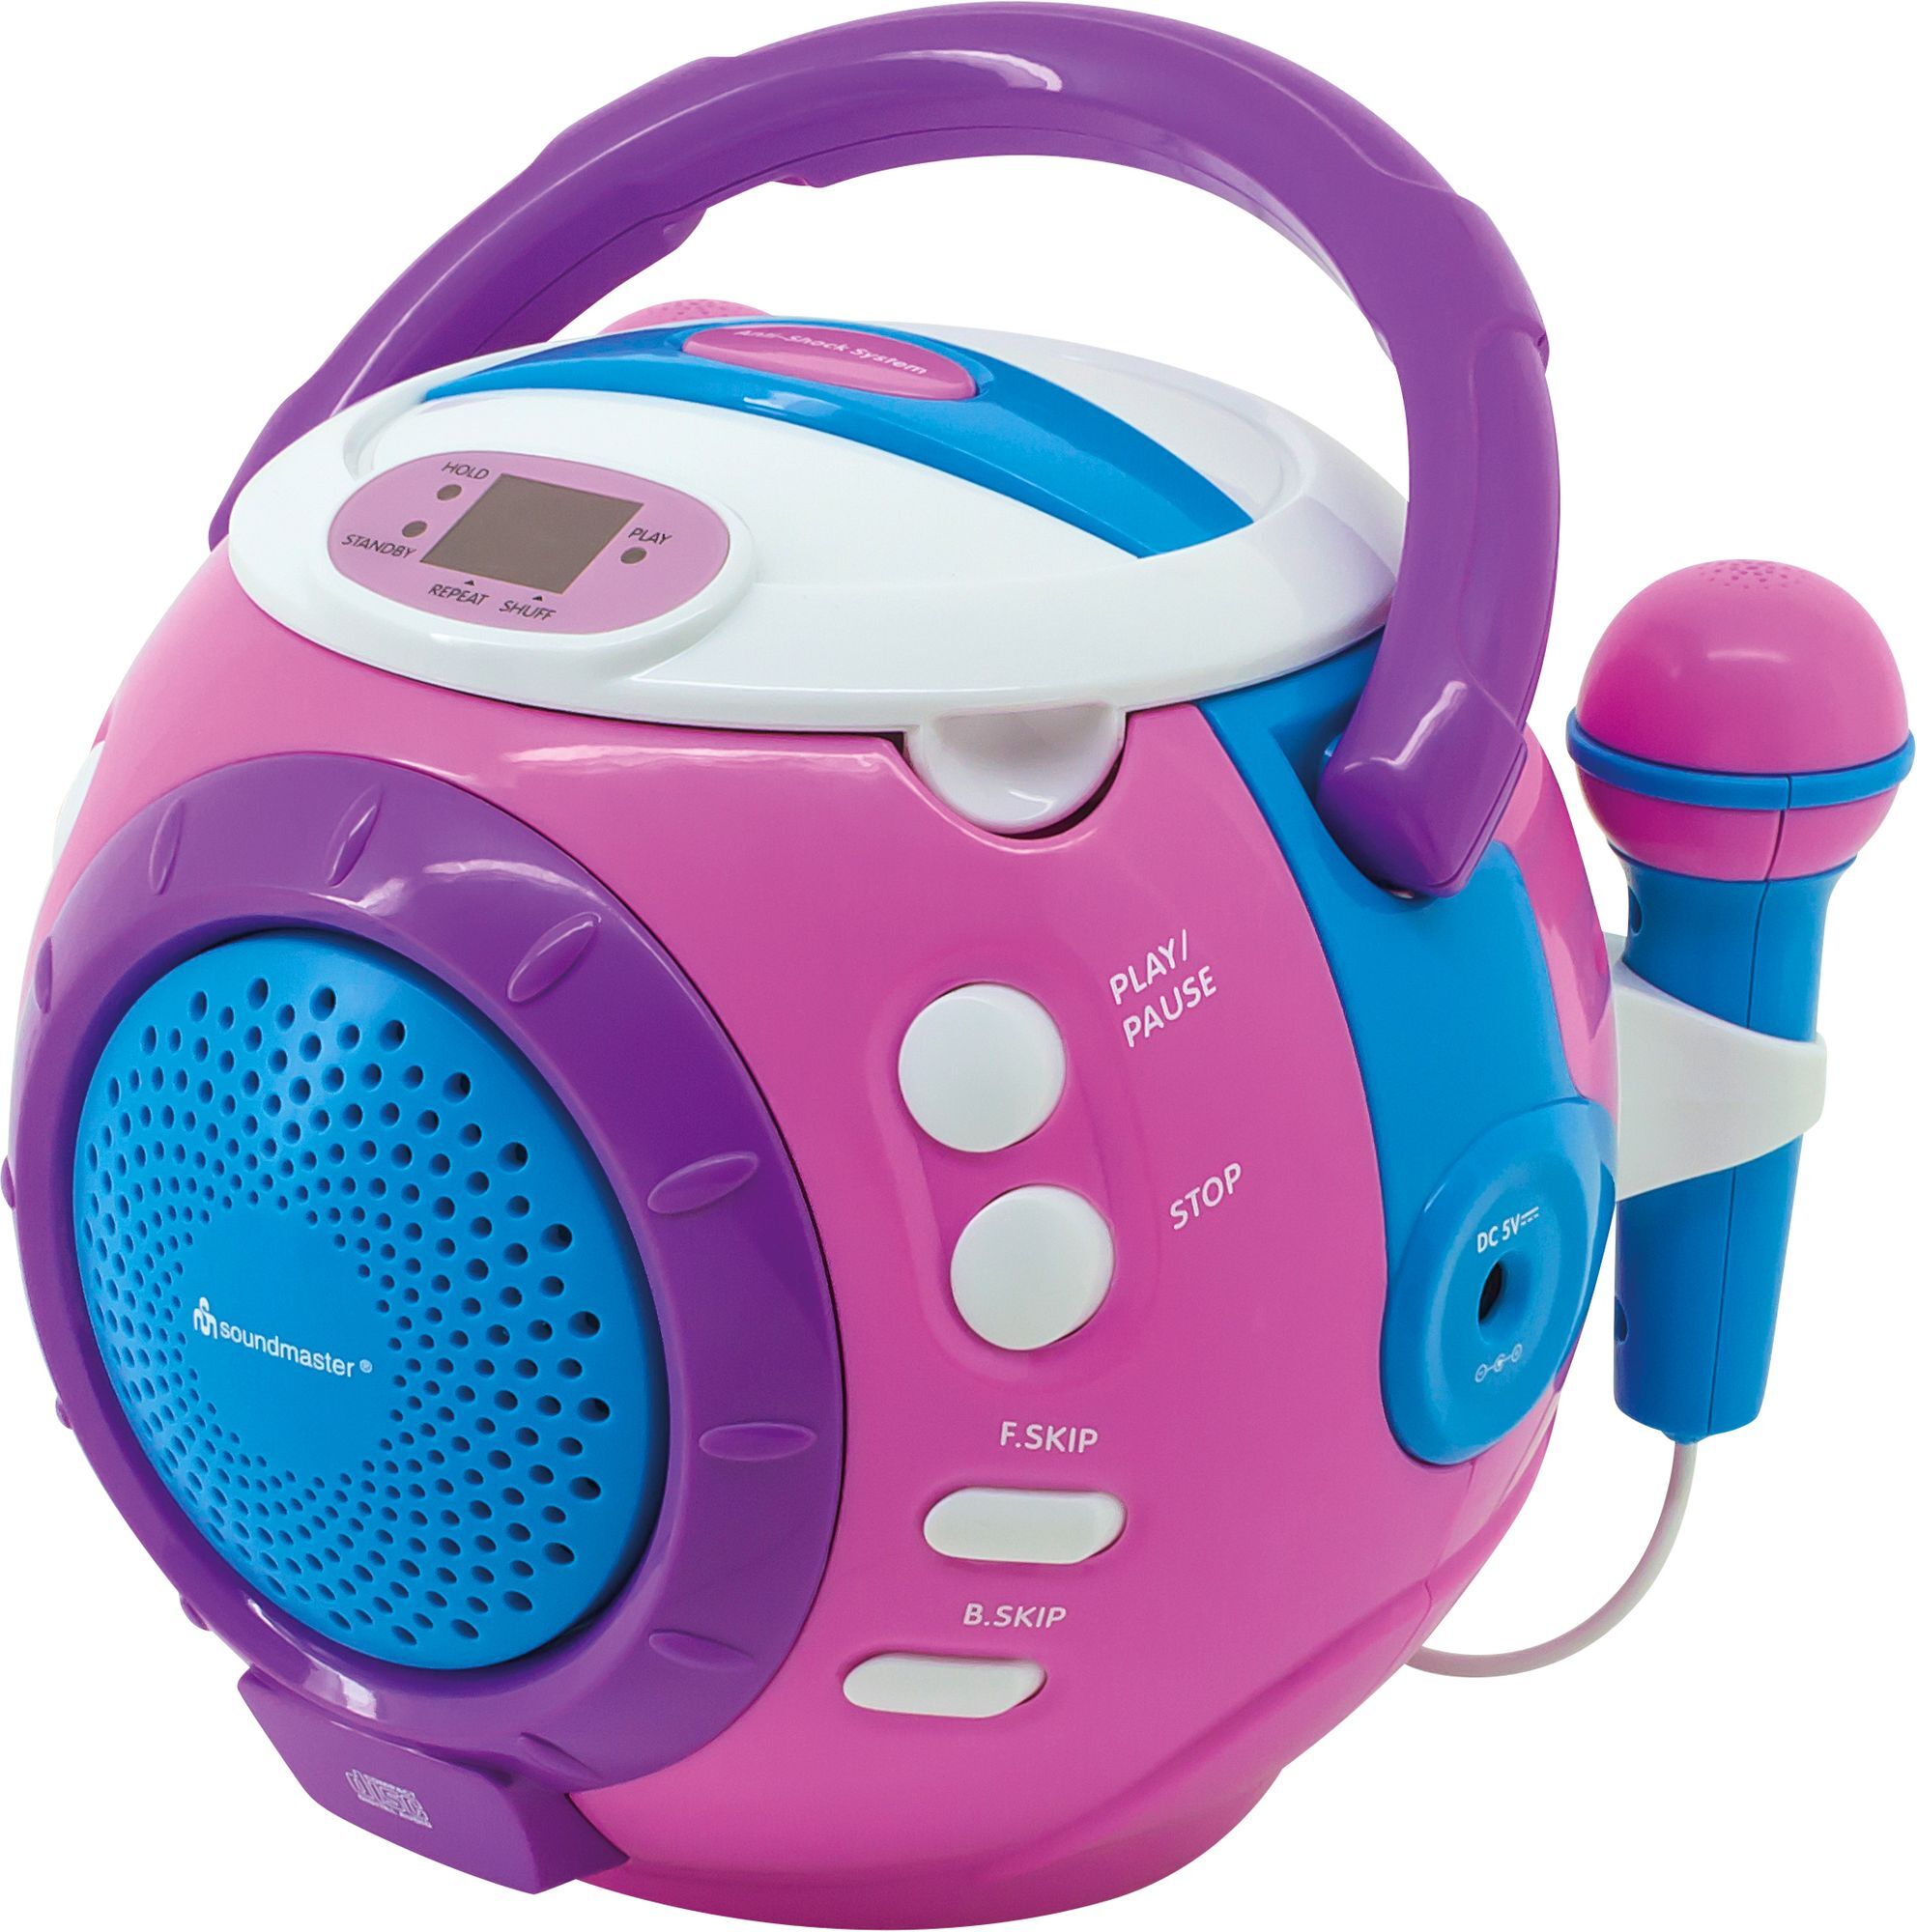 Soundmaster KCD1600PI Draagbare kinder met roze draagbare radio kopen? | Kieskeurig.nl | helpt kiezen